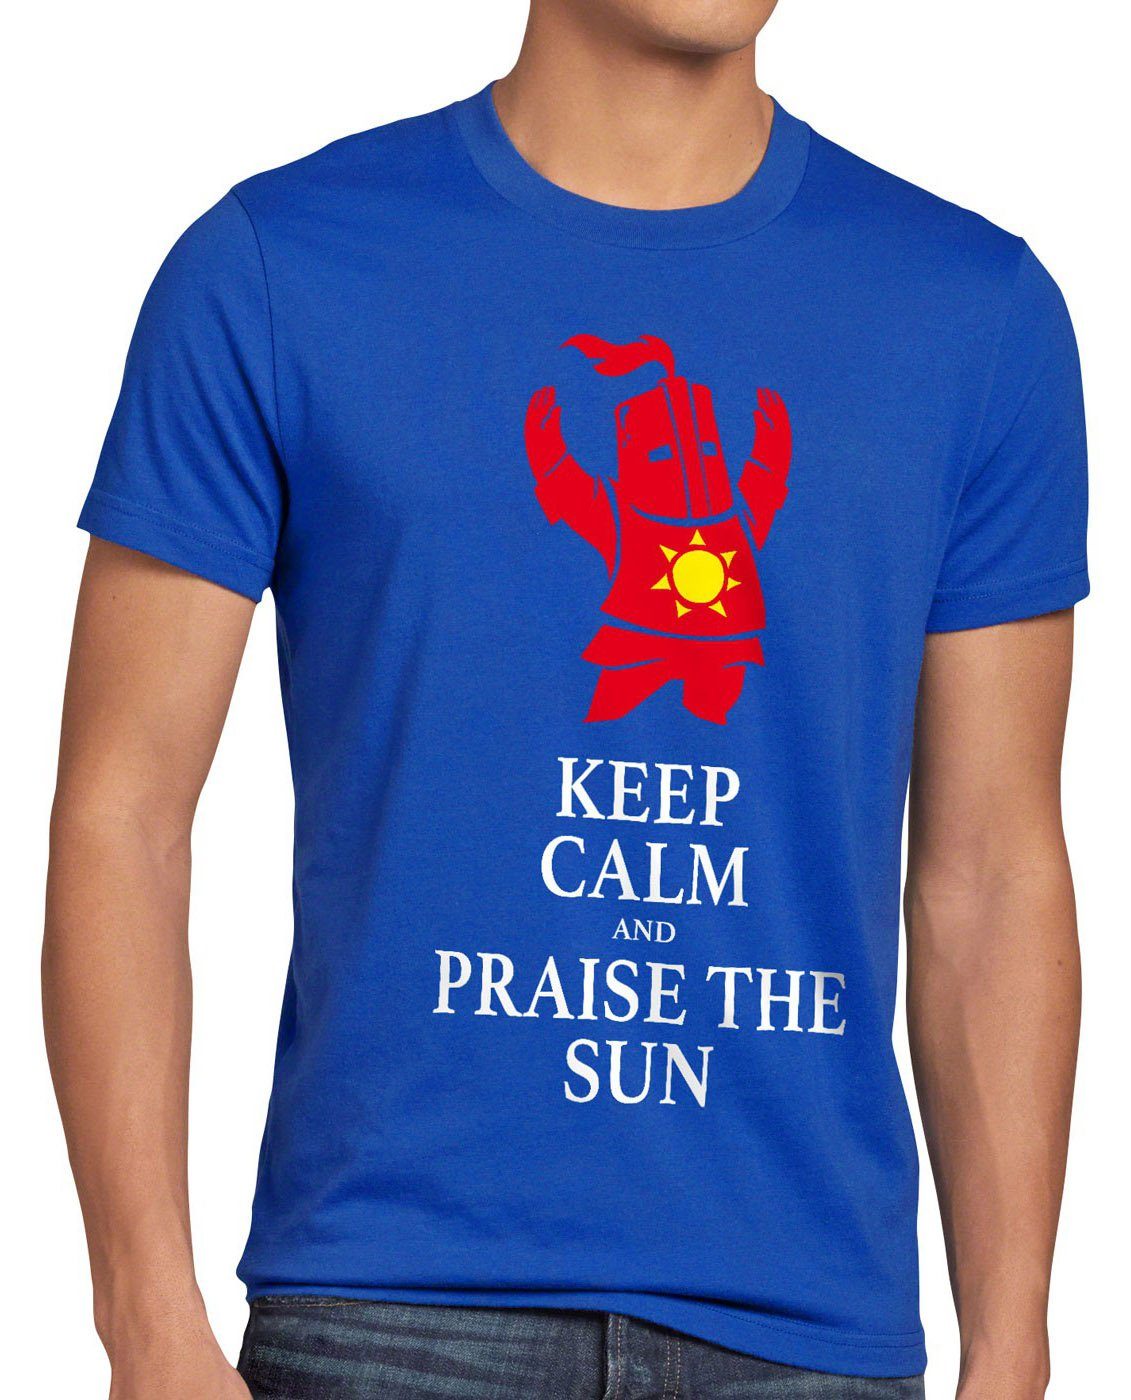 style3 Print-Shirt Herren T-Shirt Sonnen the Calm Sun Solaire Souls Ritter Praise Sunbro Keep Dark blau